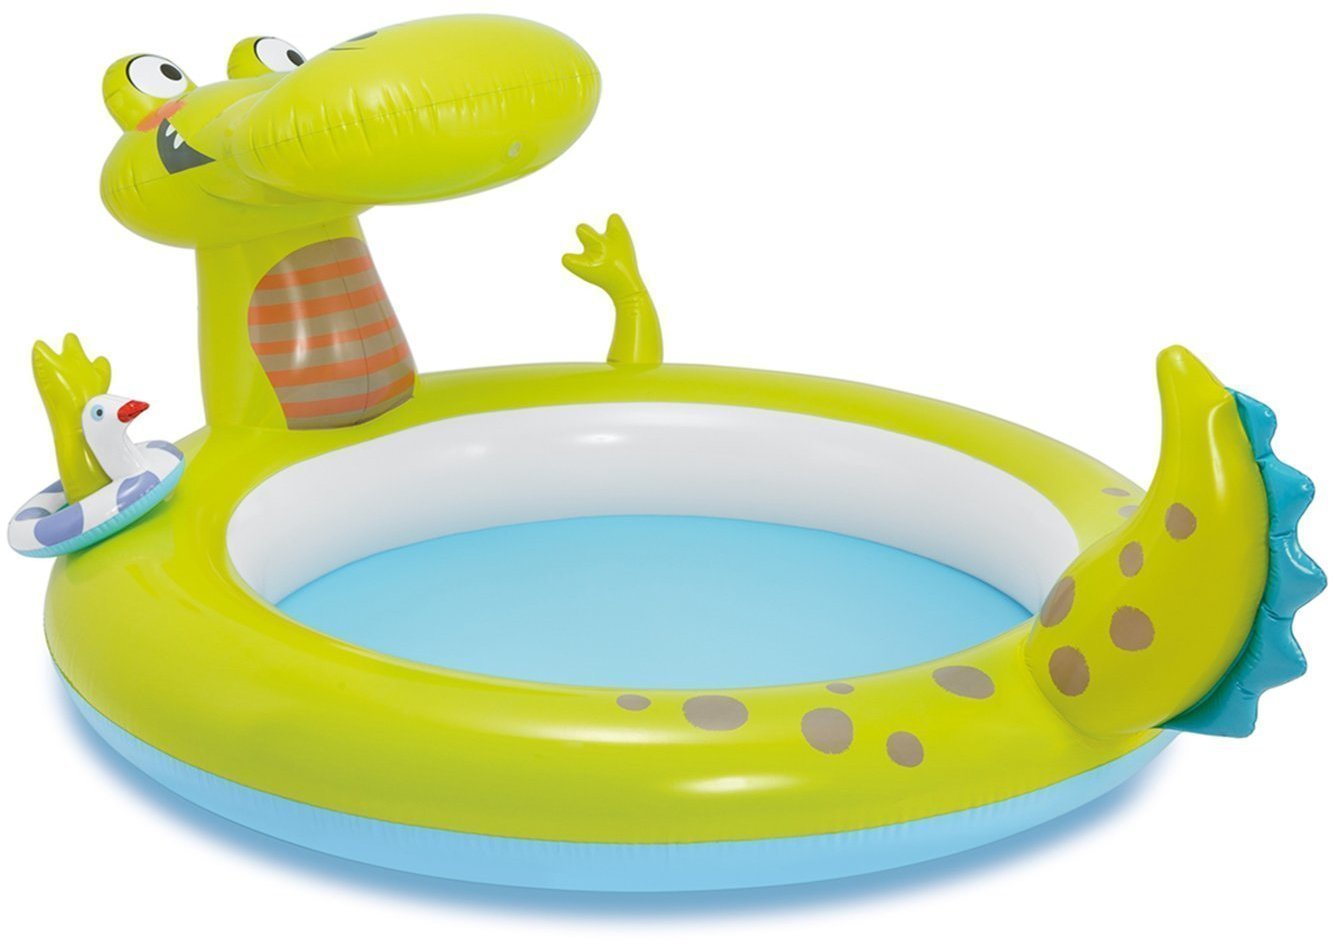 Inflatable Pool Intex Gator Spray Pool